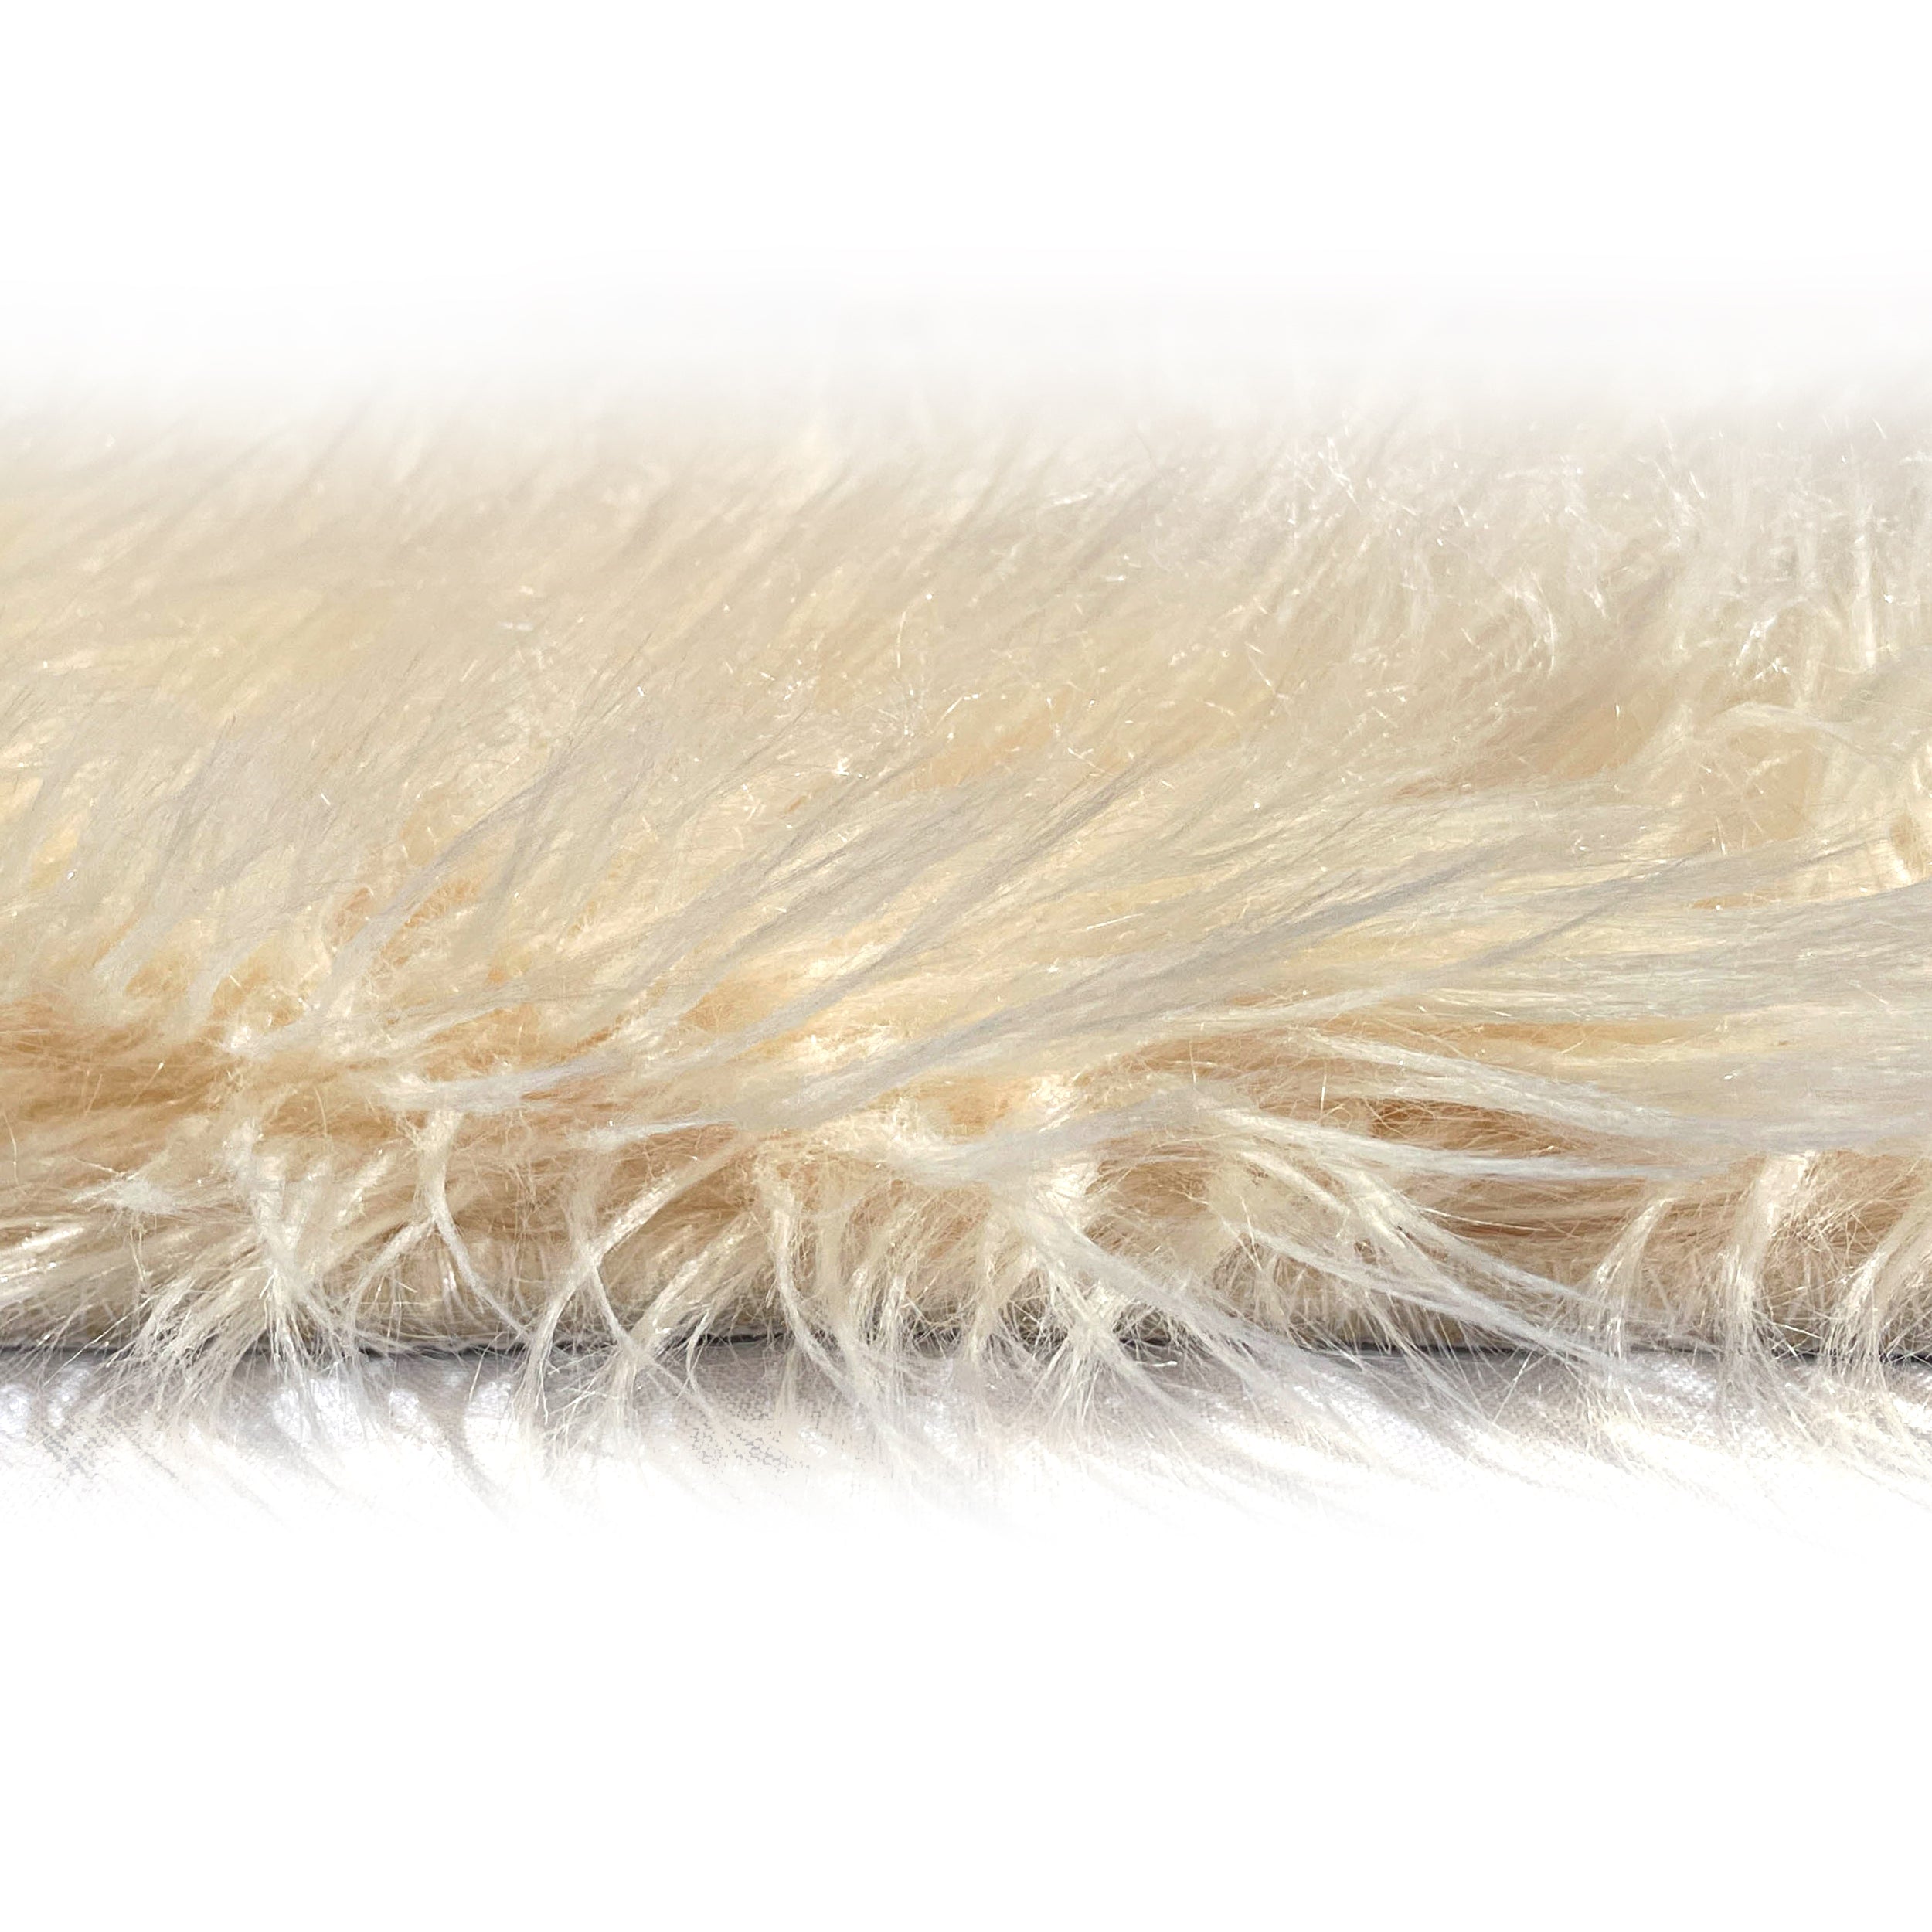 Sheepskin Beige Faux Fur Shag Area Rug